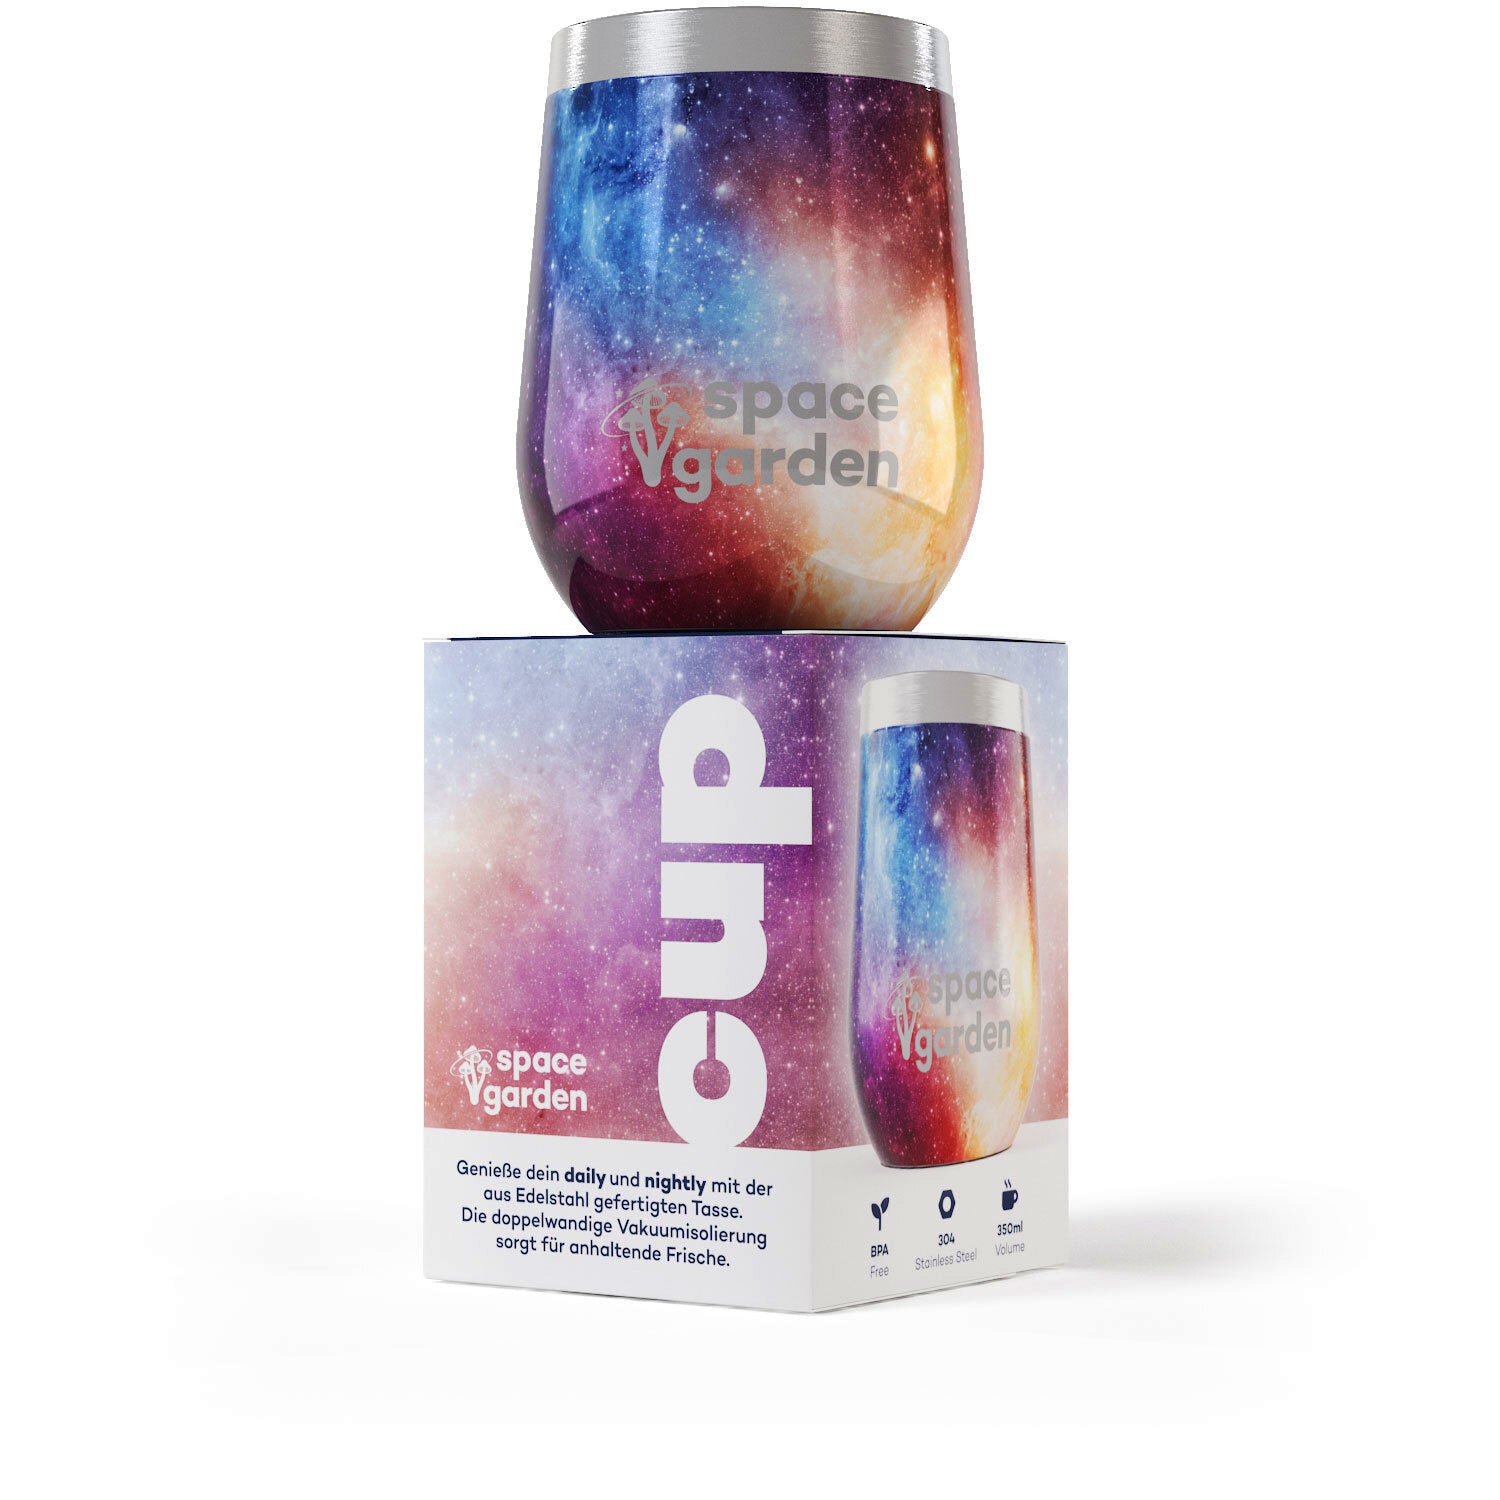 spacegarden-cup-galaxie.jpg